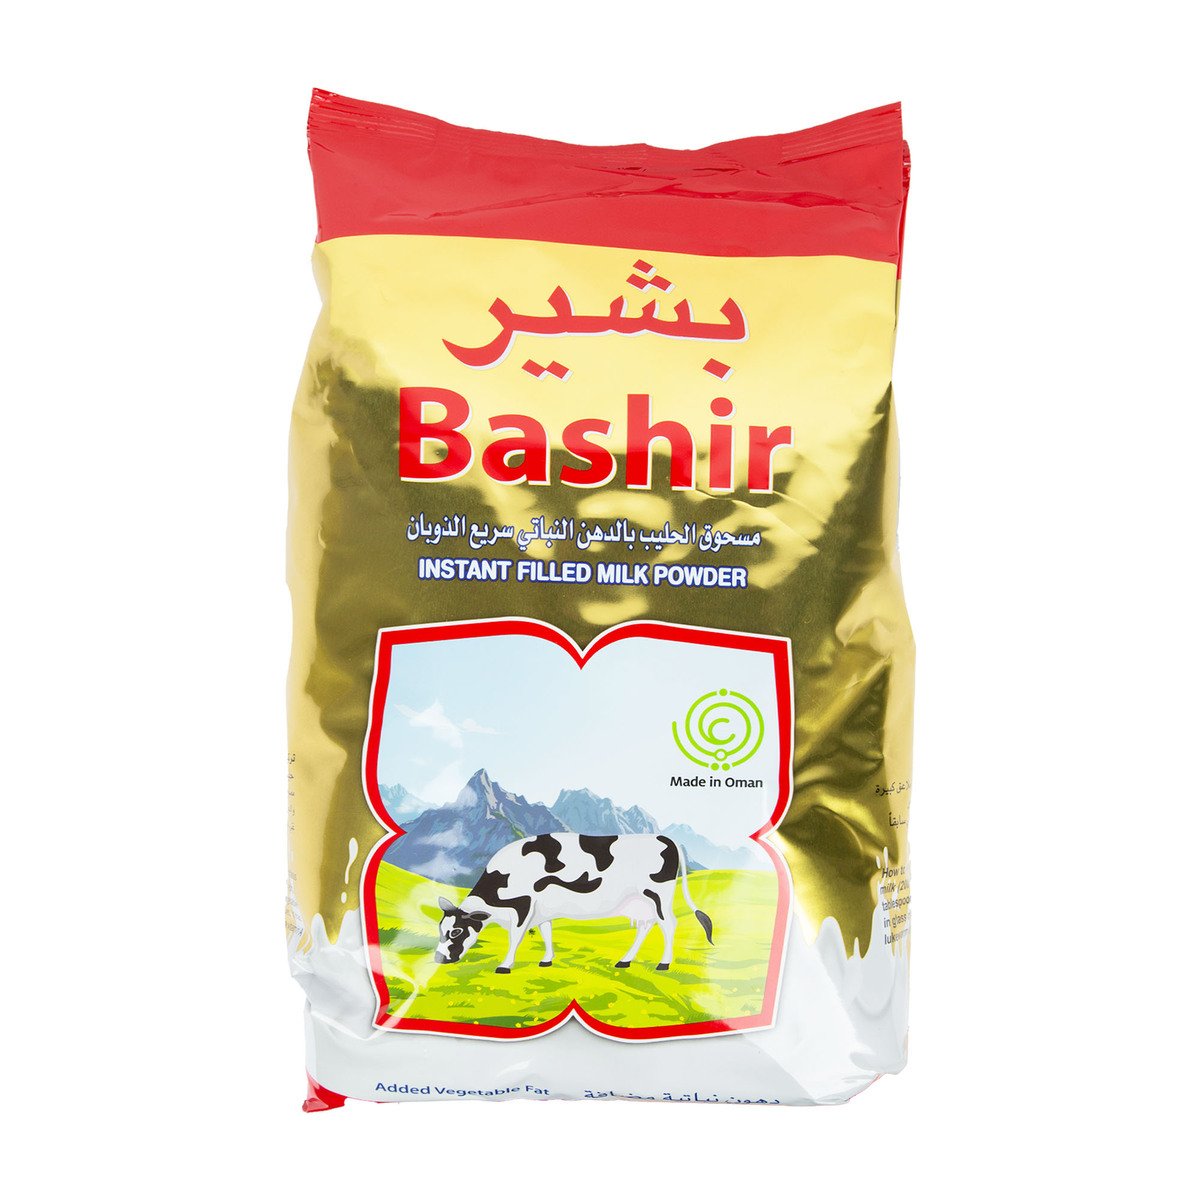 Bashir Instant Filled Milk Powder 2 kg